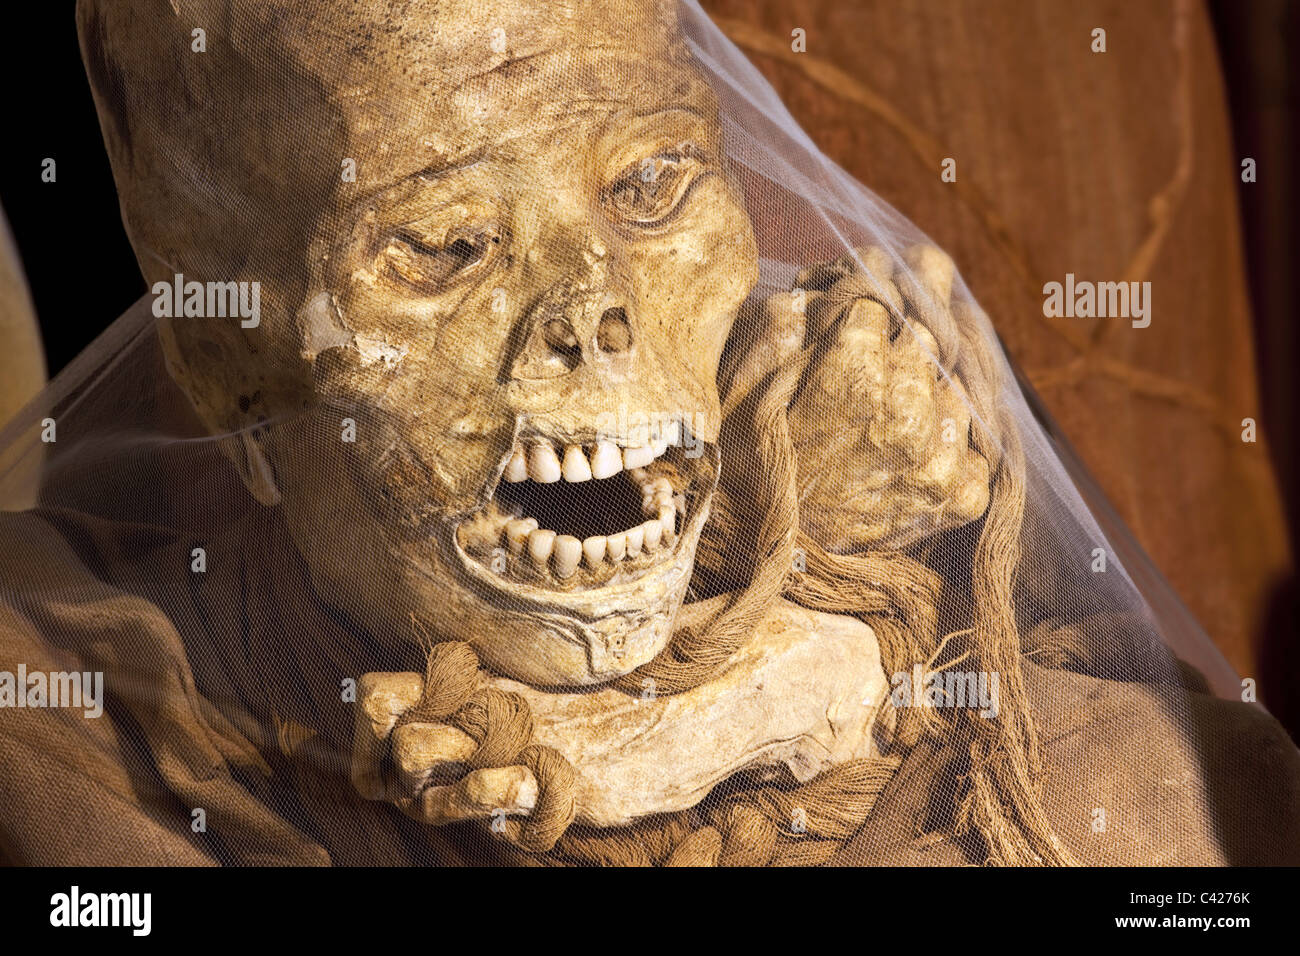 Peru, Leymebamba, Leimebamba, Museum. Mummy found at Laguna de los Condores. (unwrapped from their original bundles). Stock Photo